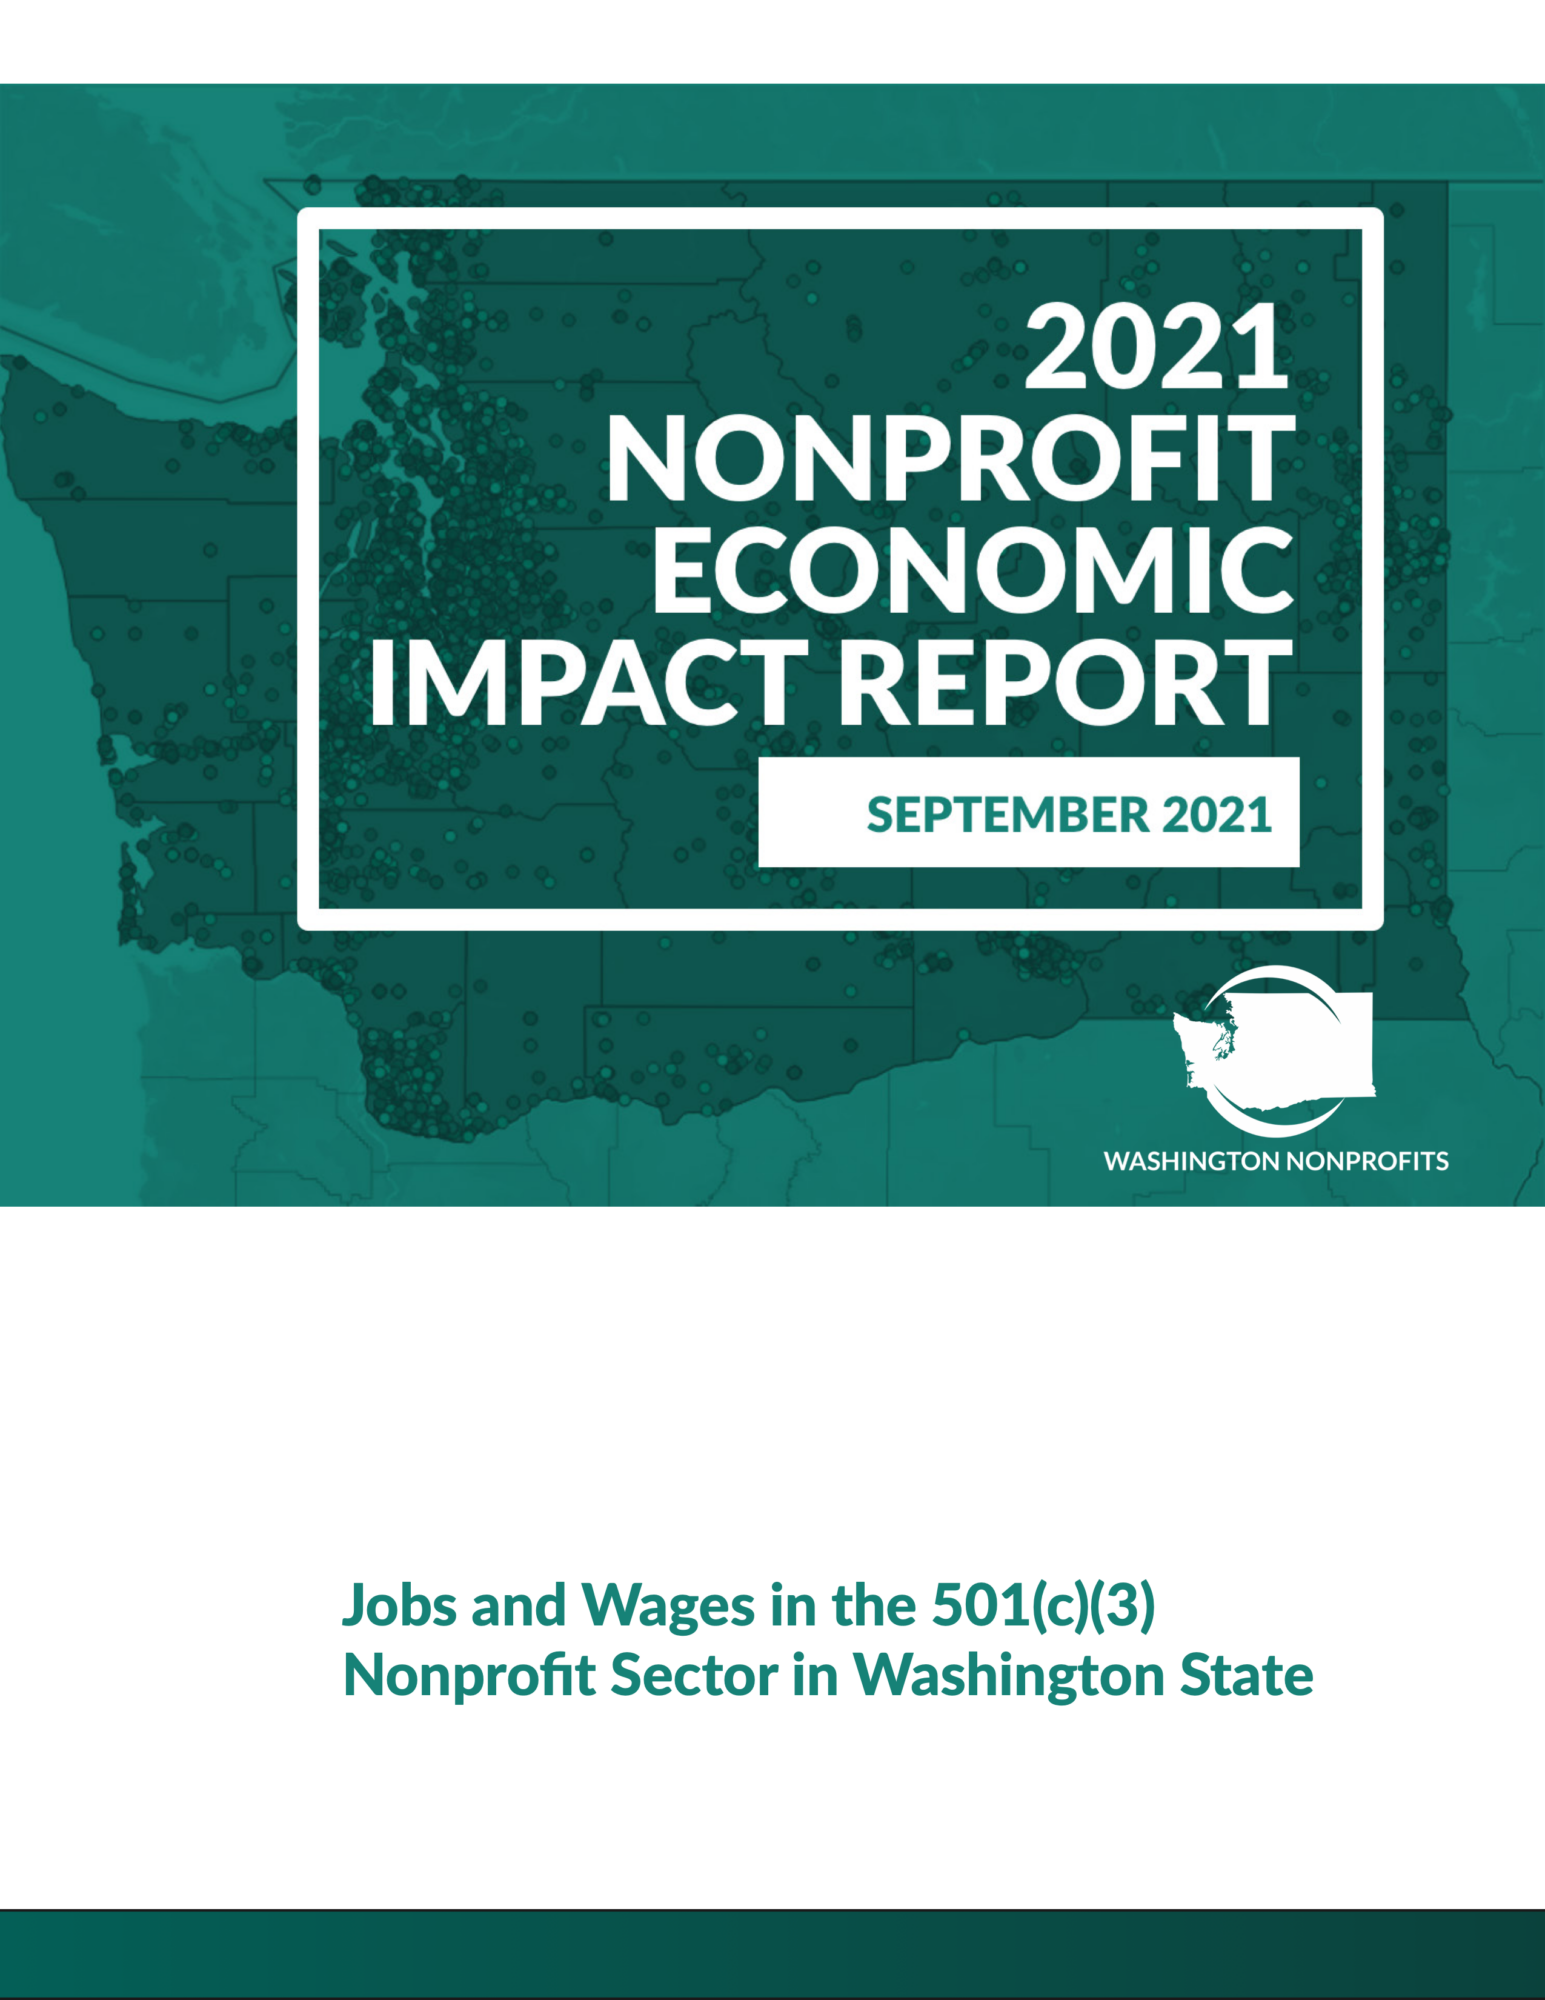 The 2021 Nonprofit Economic Impact Report